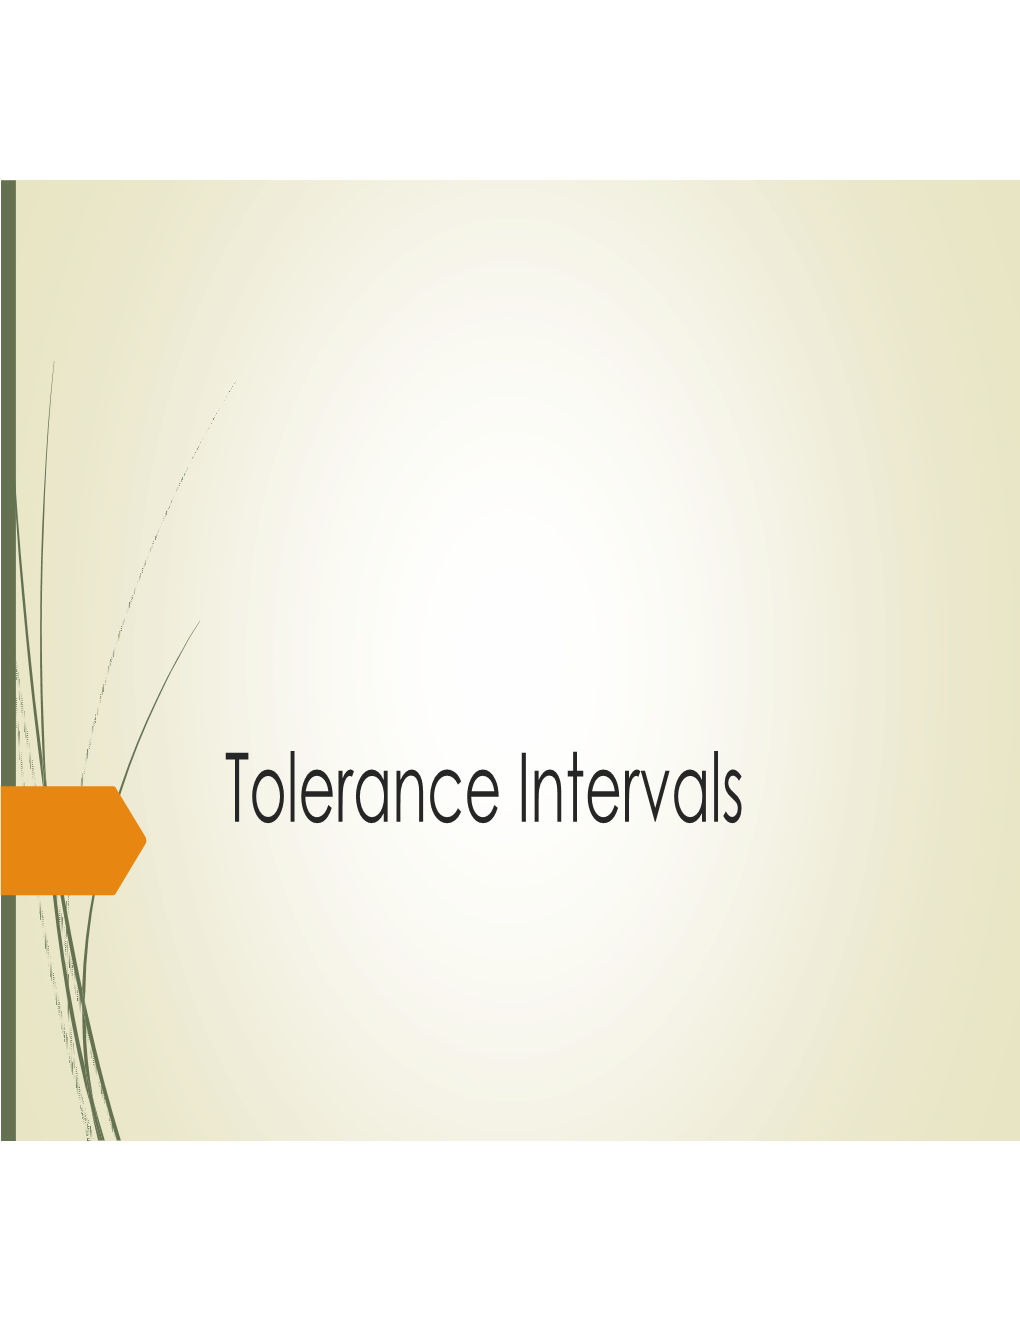 Tolerance Intervals Example 1: Asthma Inhaler